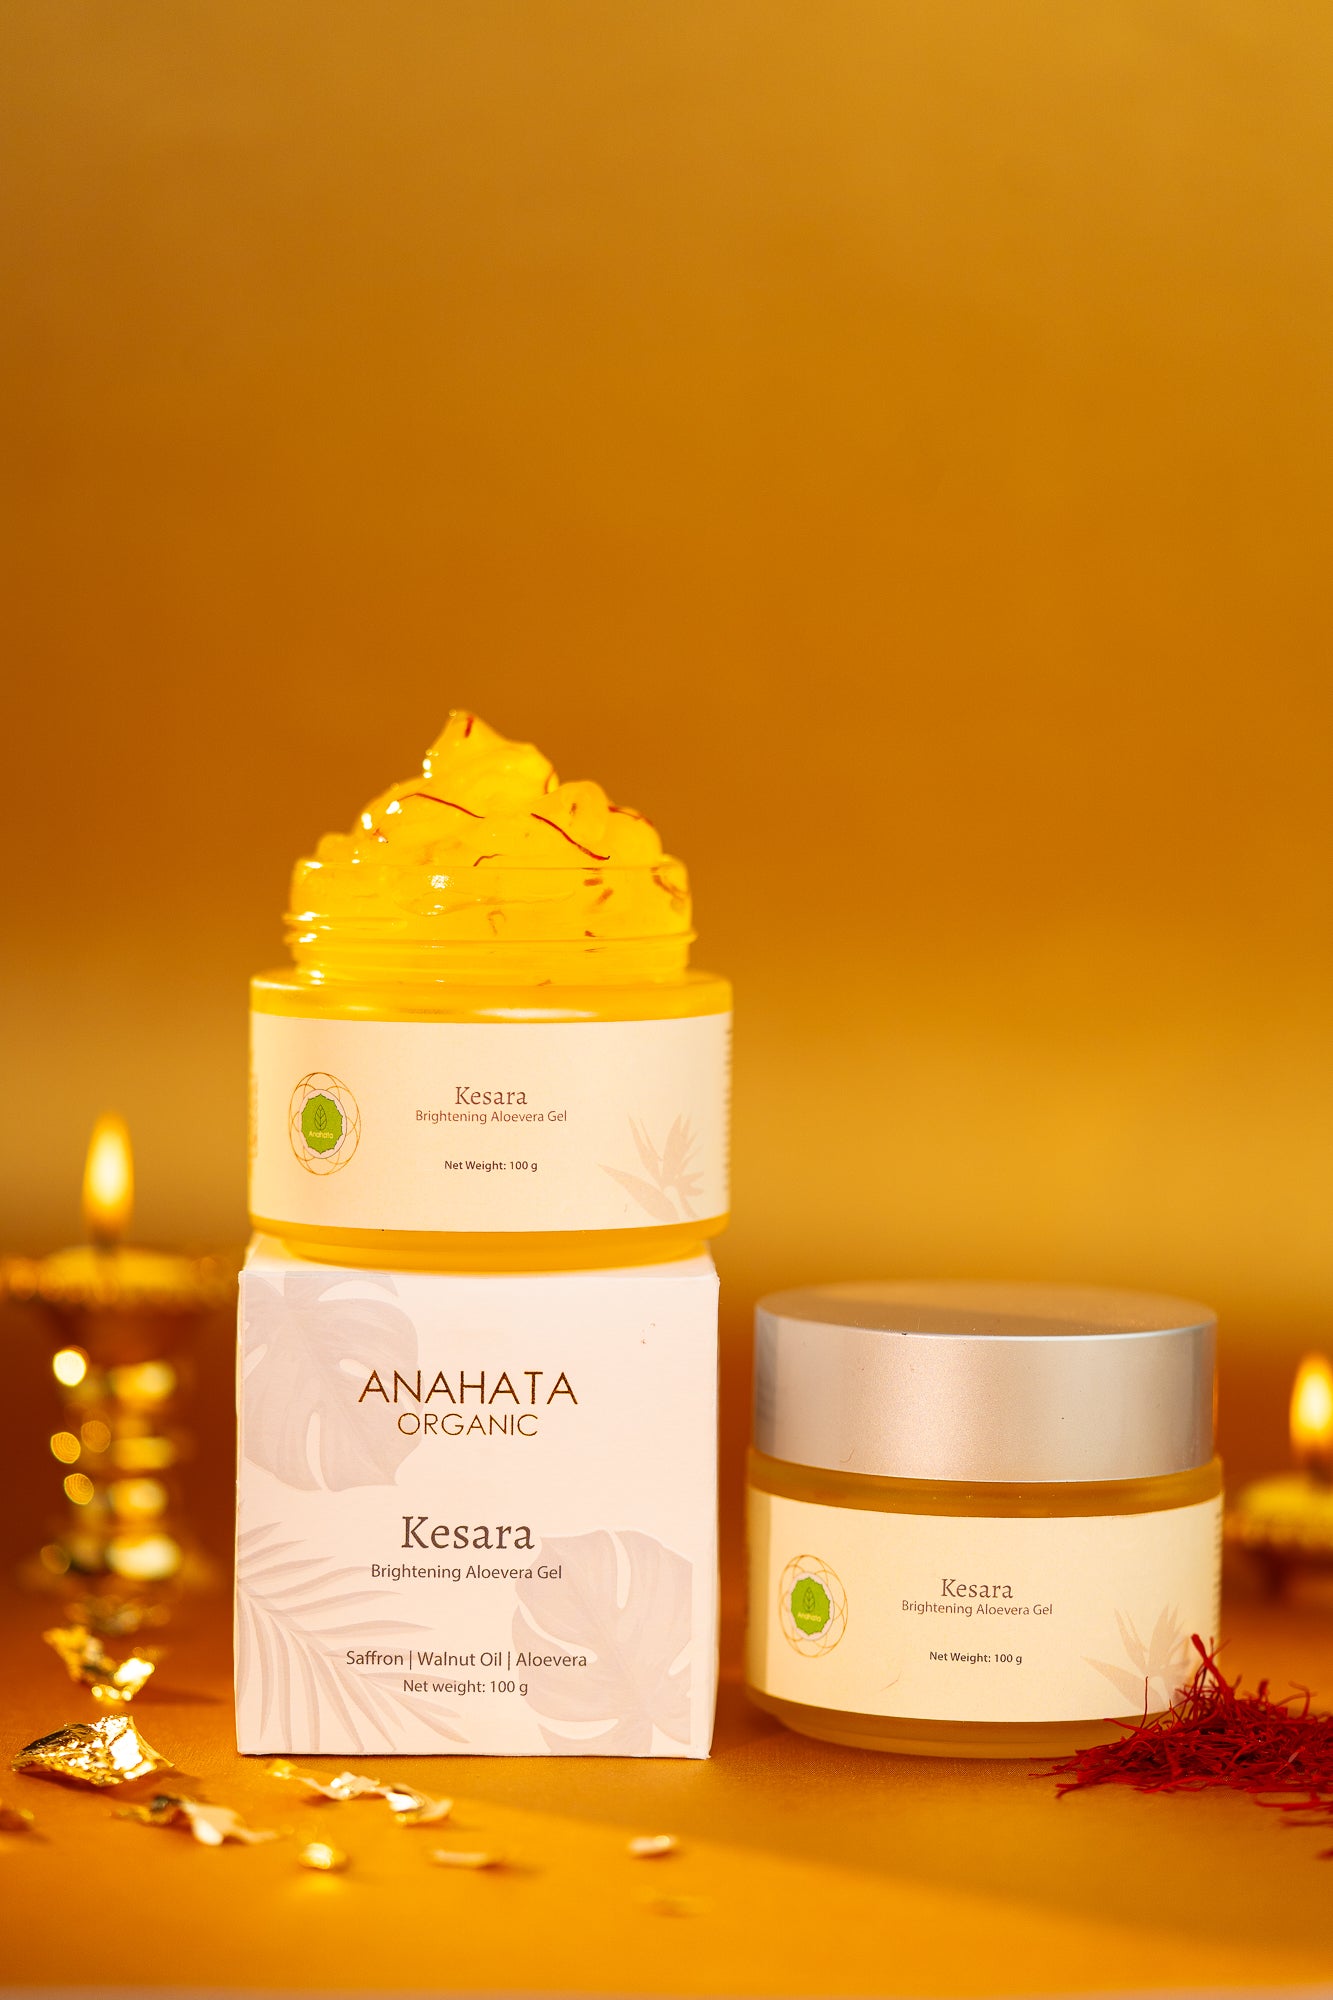 KESARA Brightening Aloevera Gel - Anahata Organic